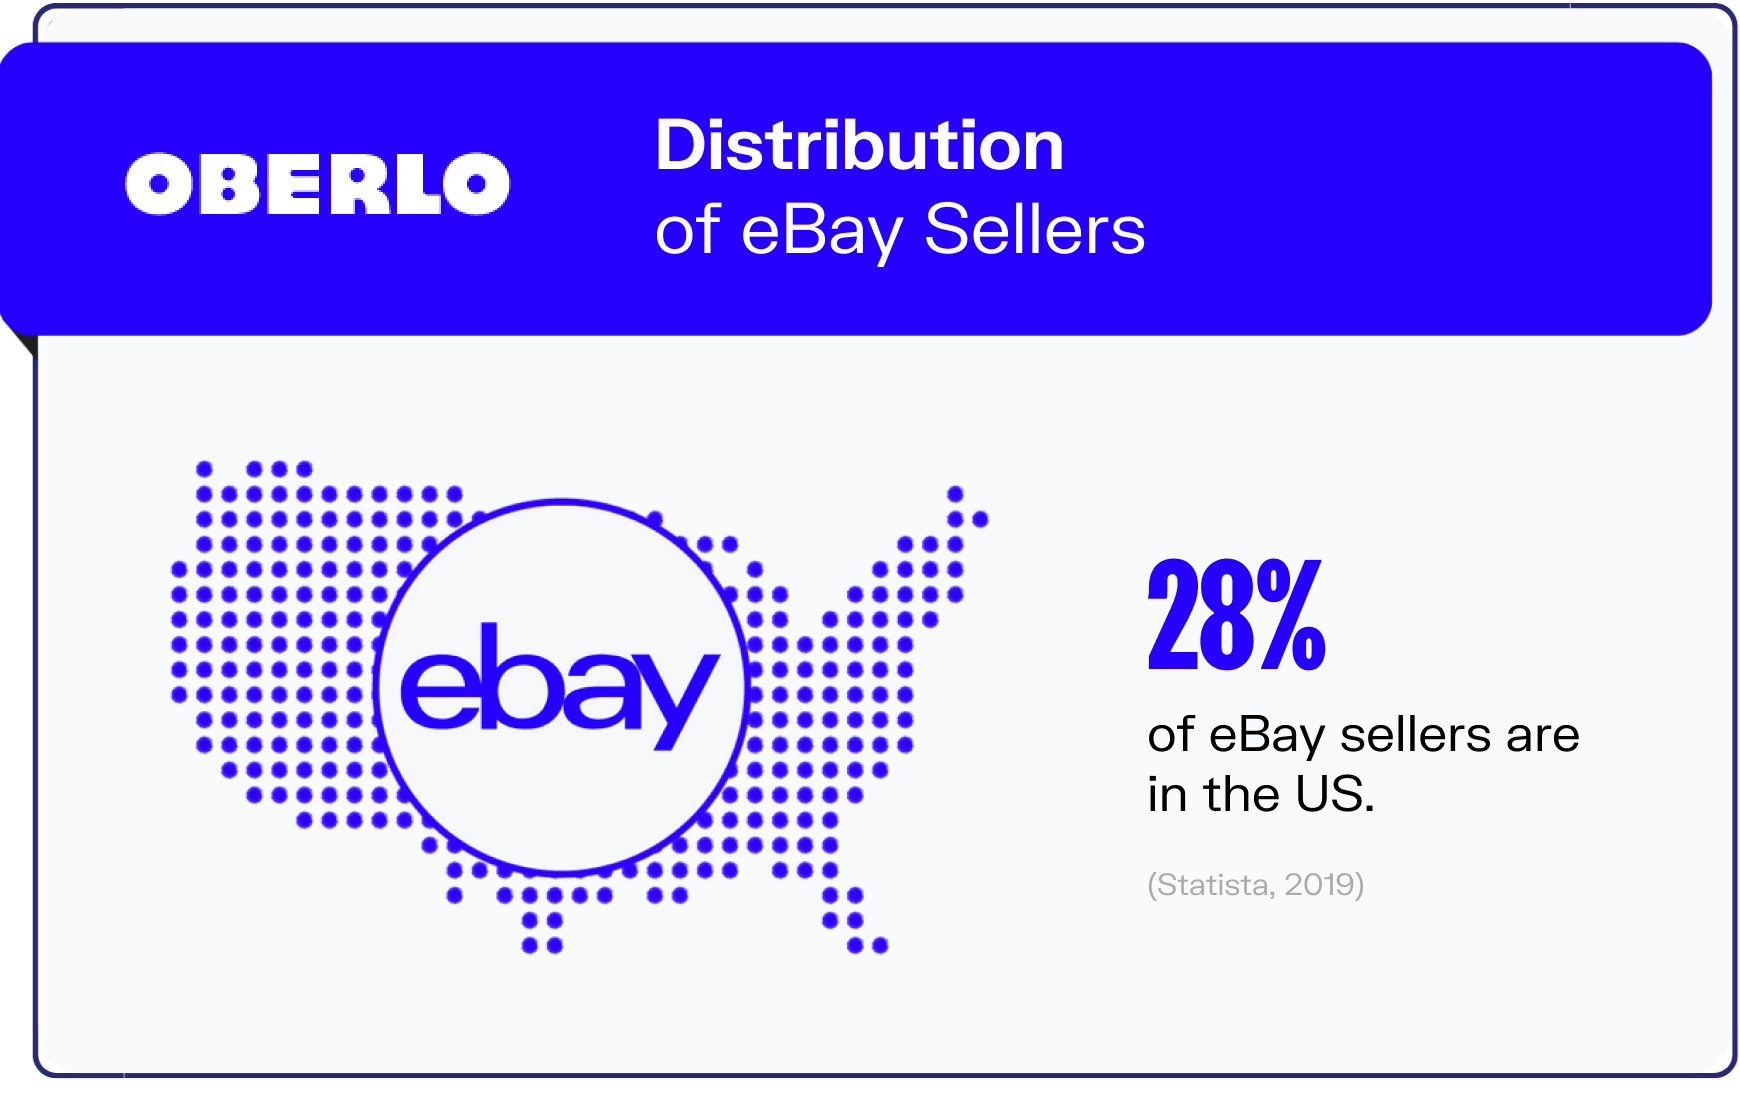 ebay statistics graphic10